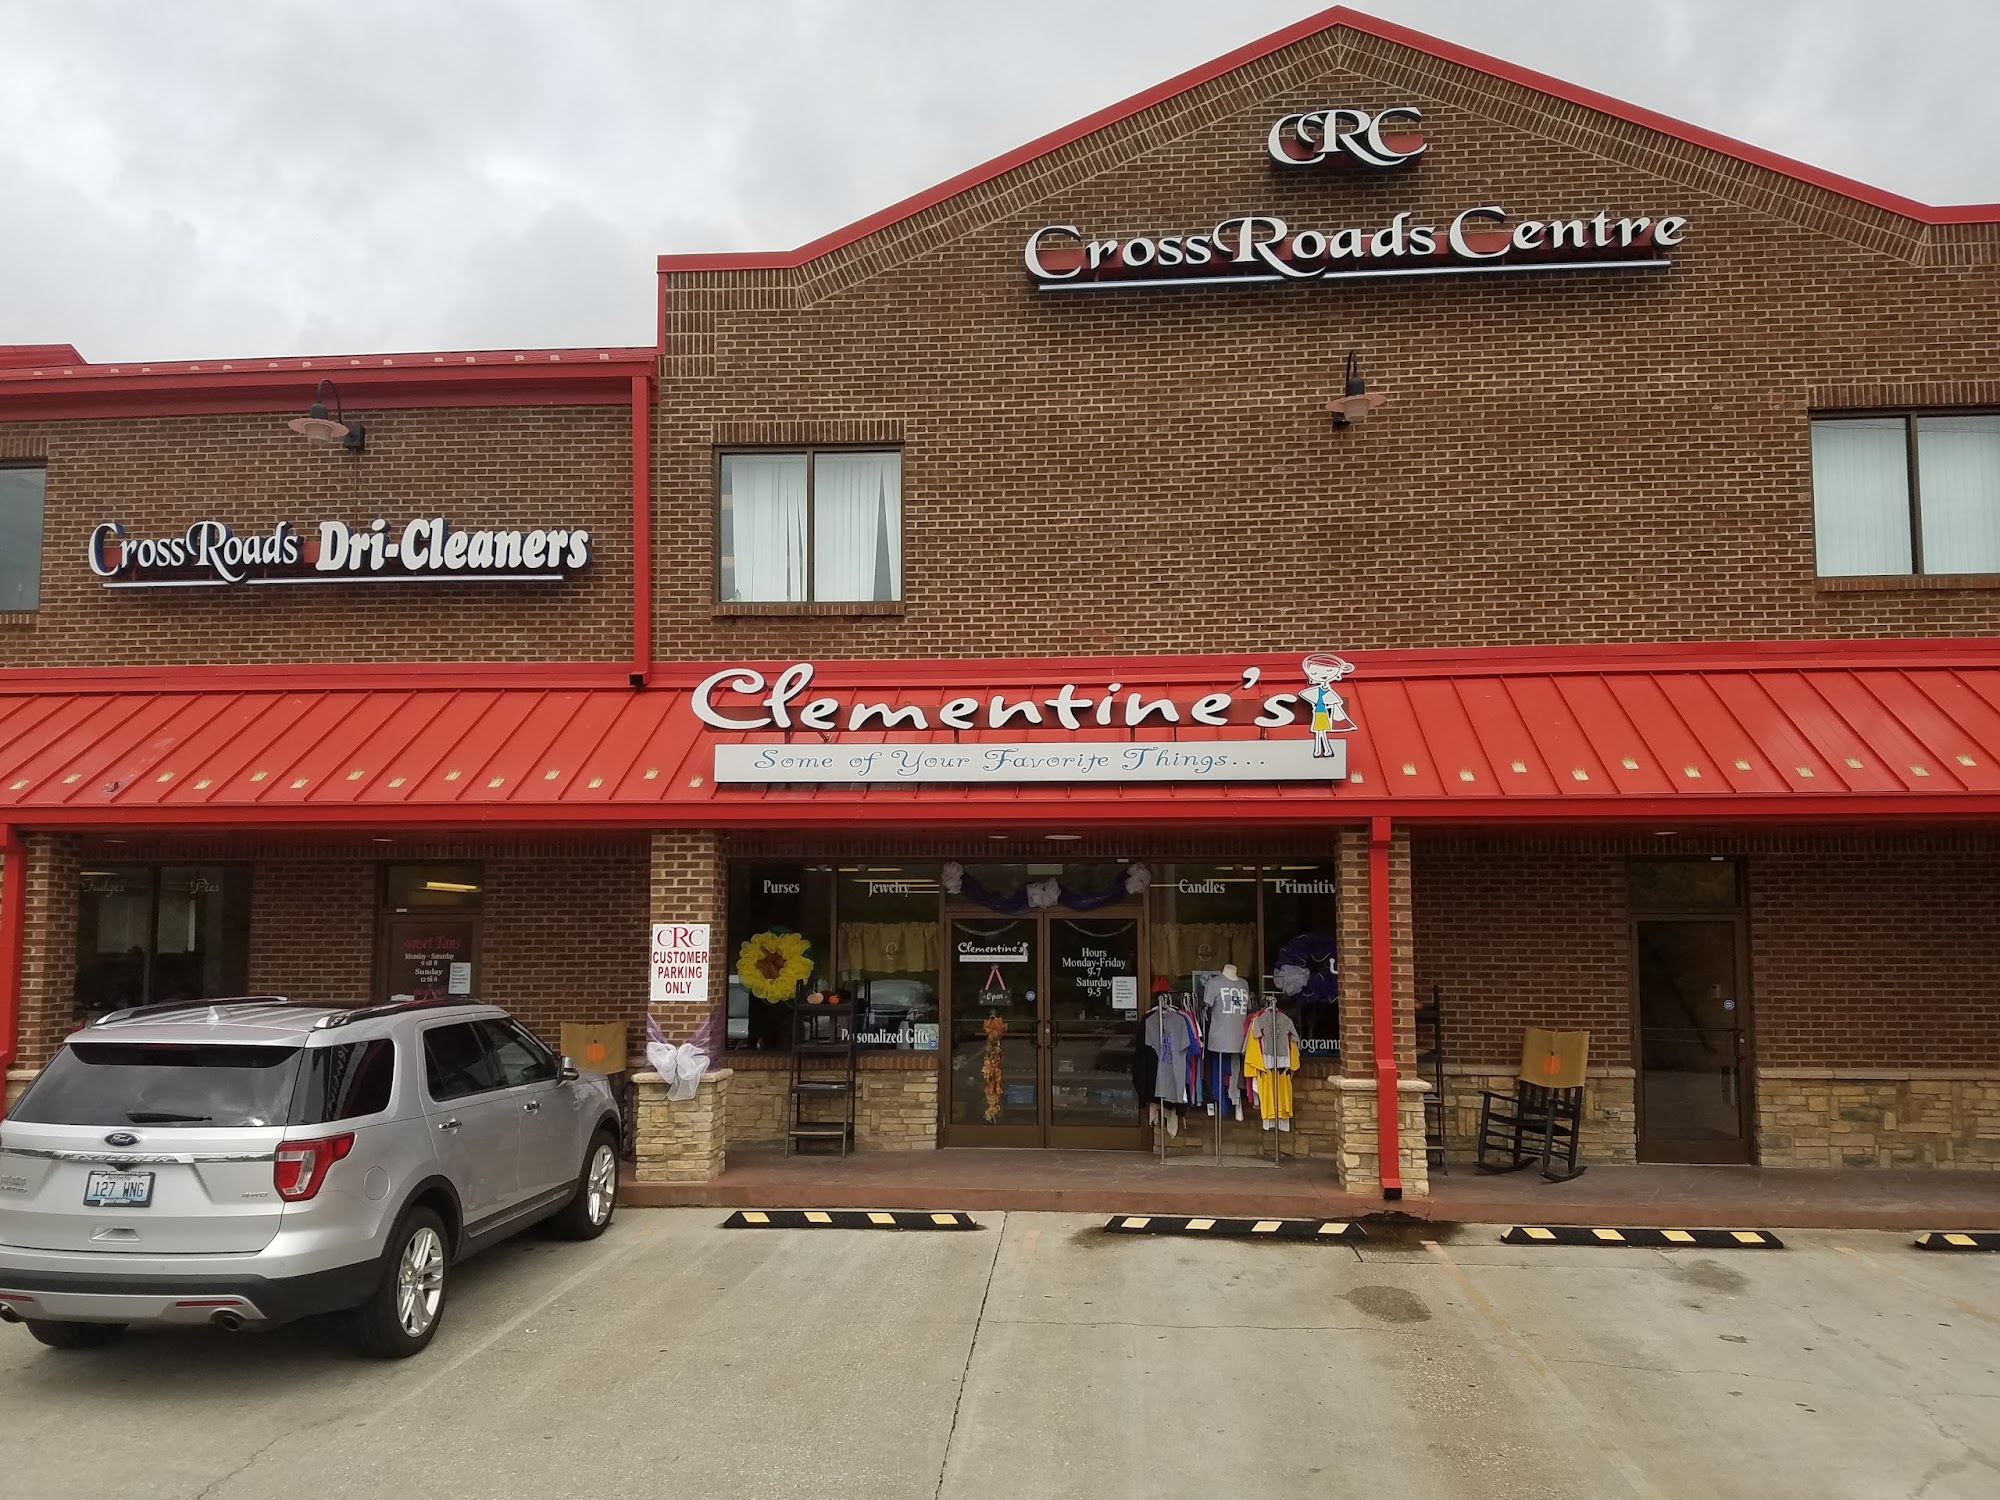 Clementine's 221 S Main St, Stanton Kentucky 40380